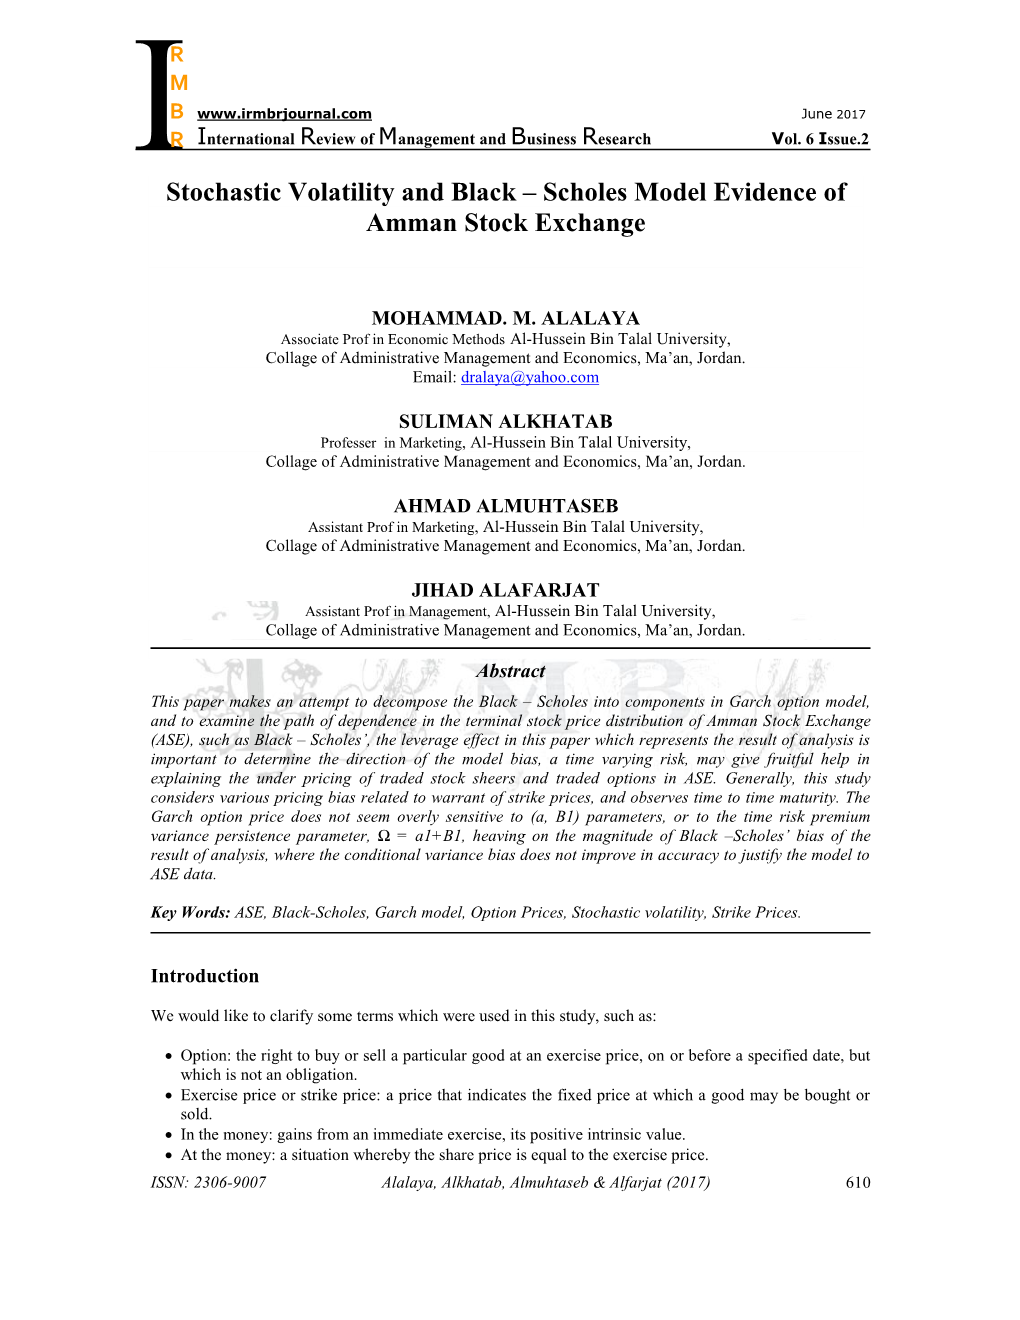 Stochastic Volatility and Black – Scholes Model Evidence of Amman Stock Exchange